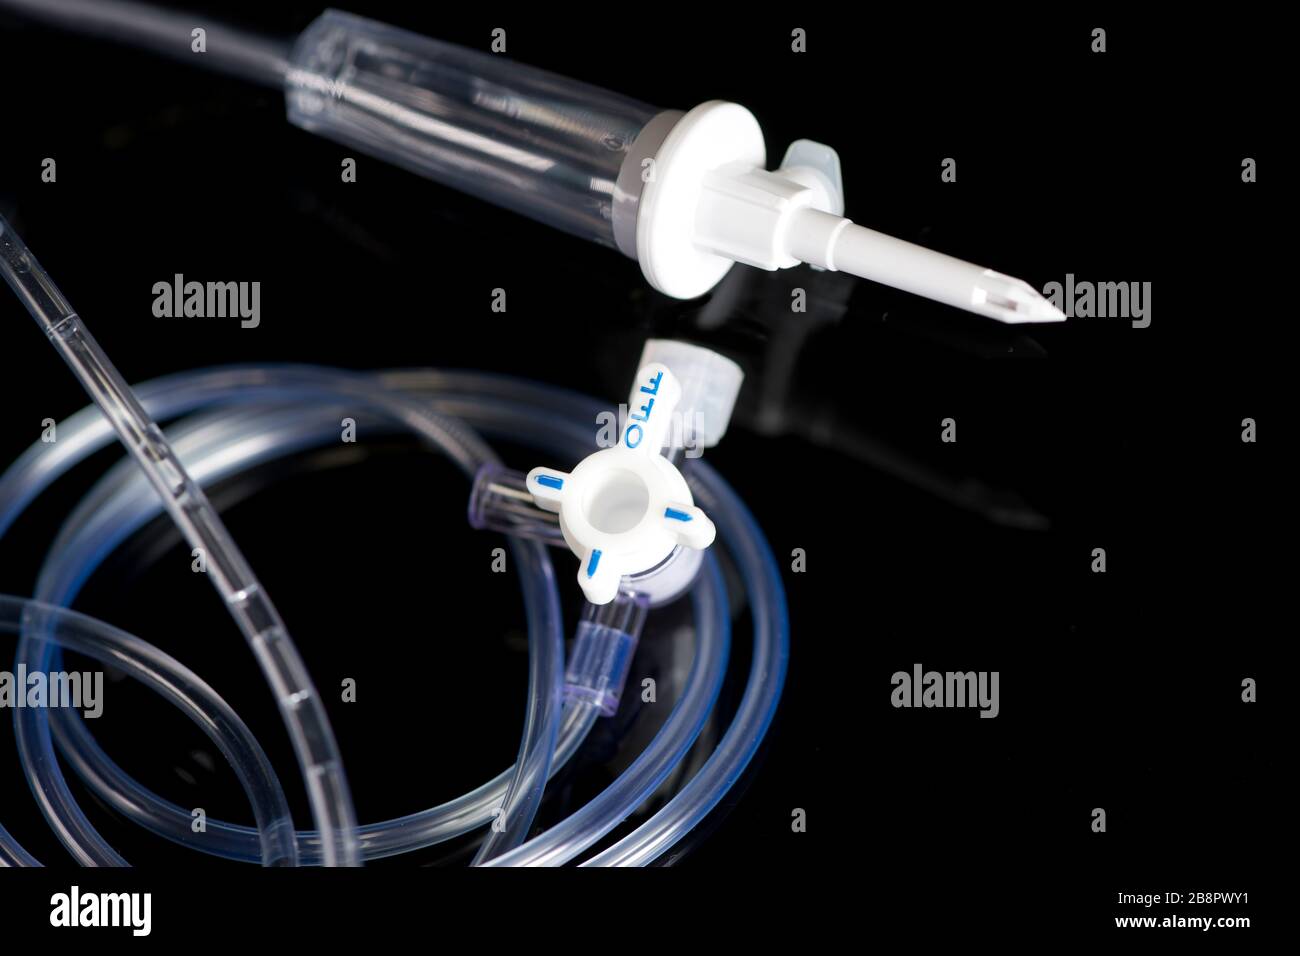 IV stopcock regulator with IV drip chamber and IV tubing on black. Stock Photo